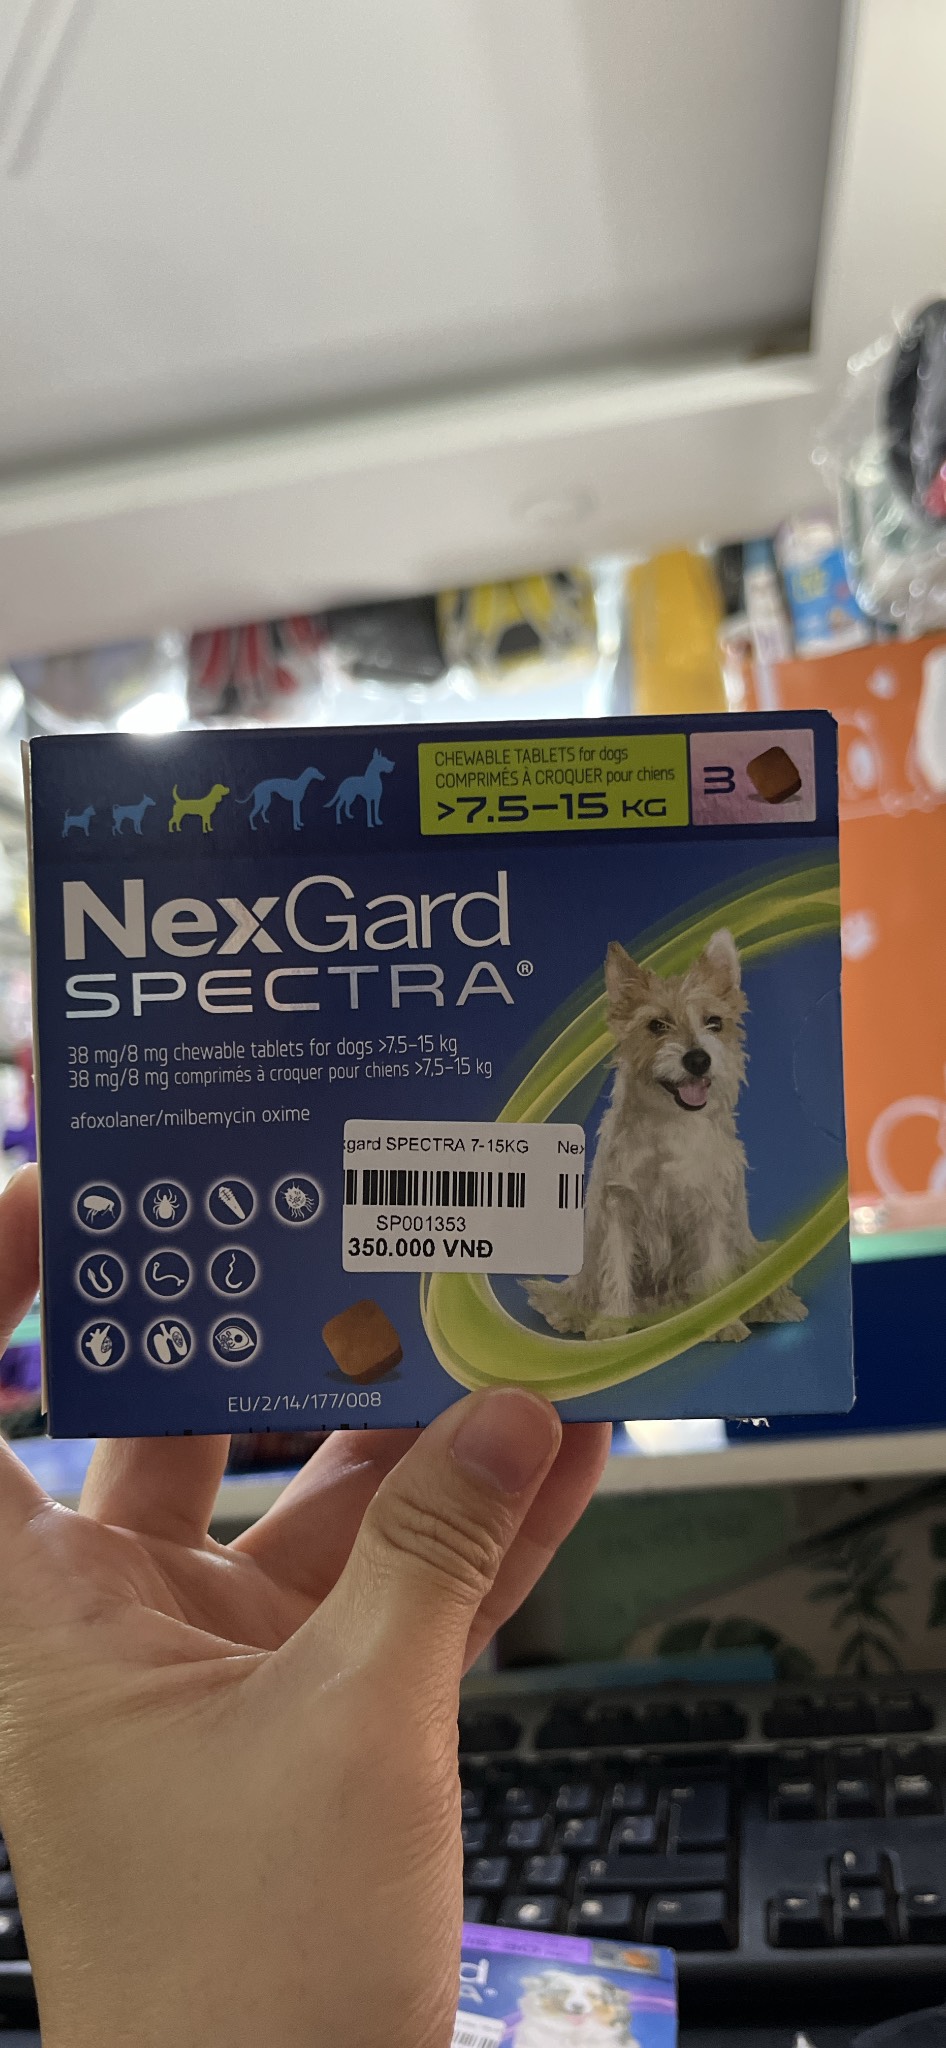 Nexgard SPECTRA 7-15KG